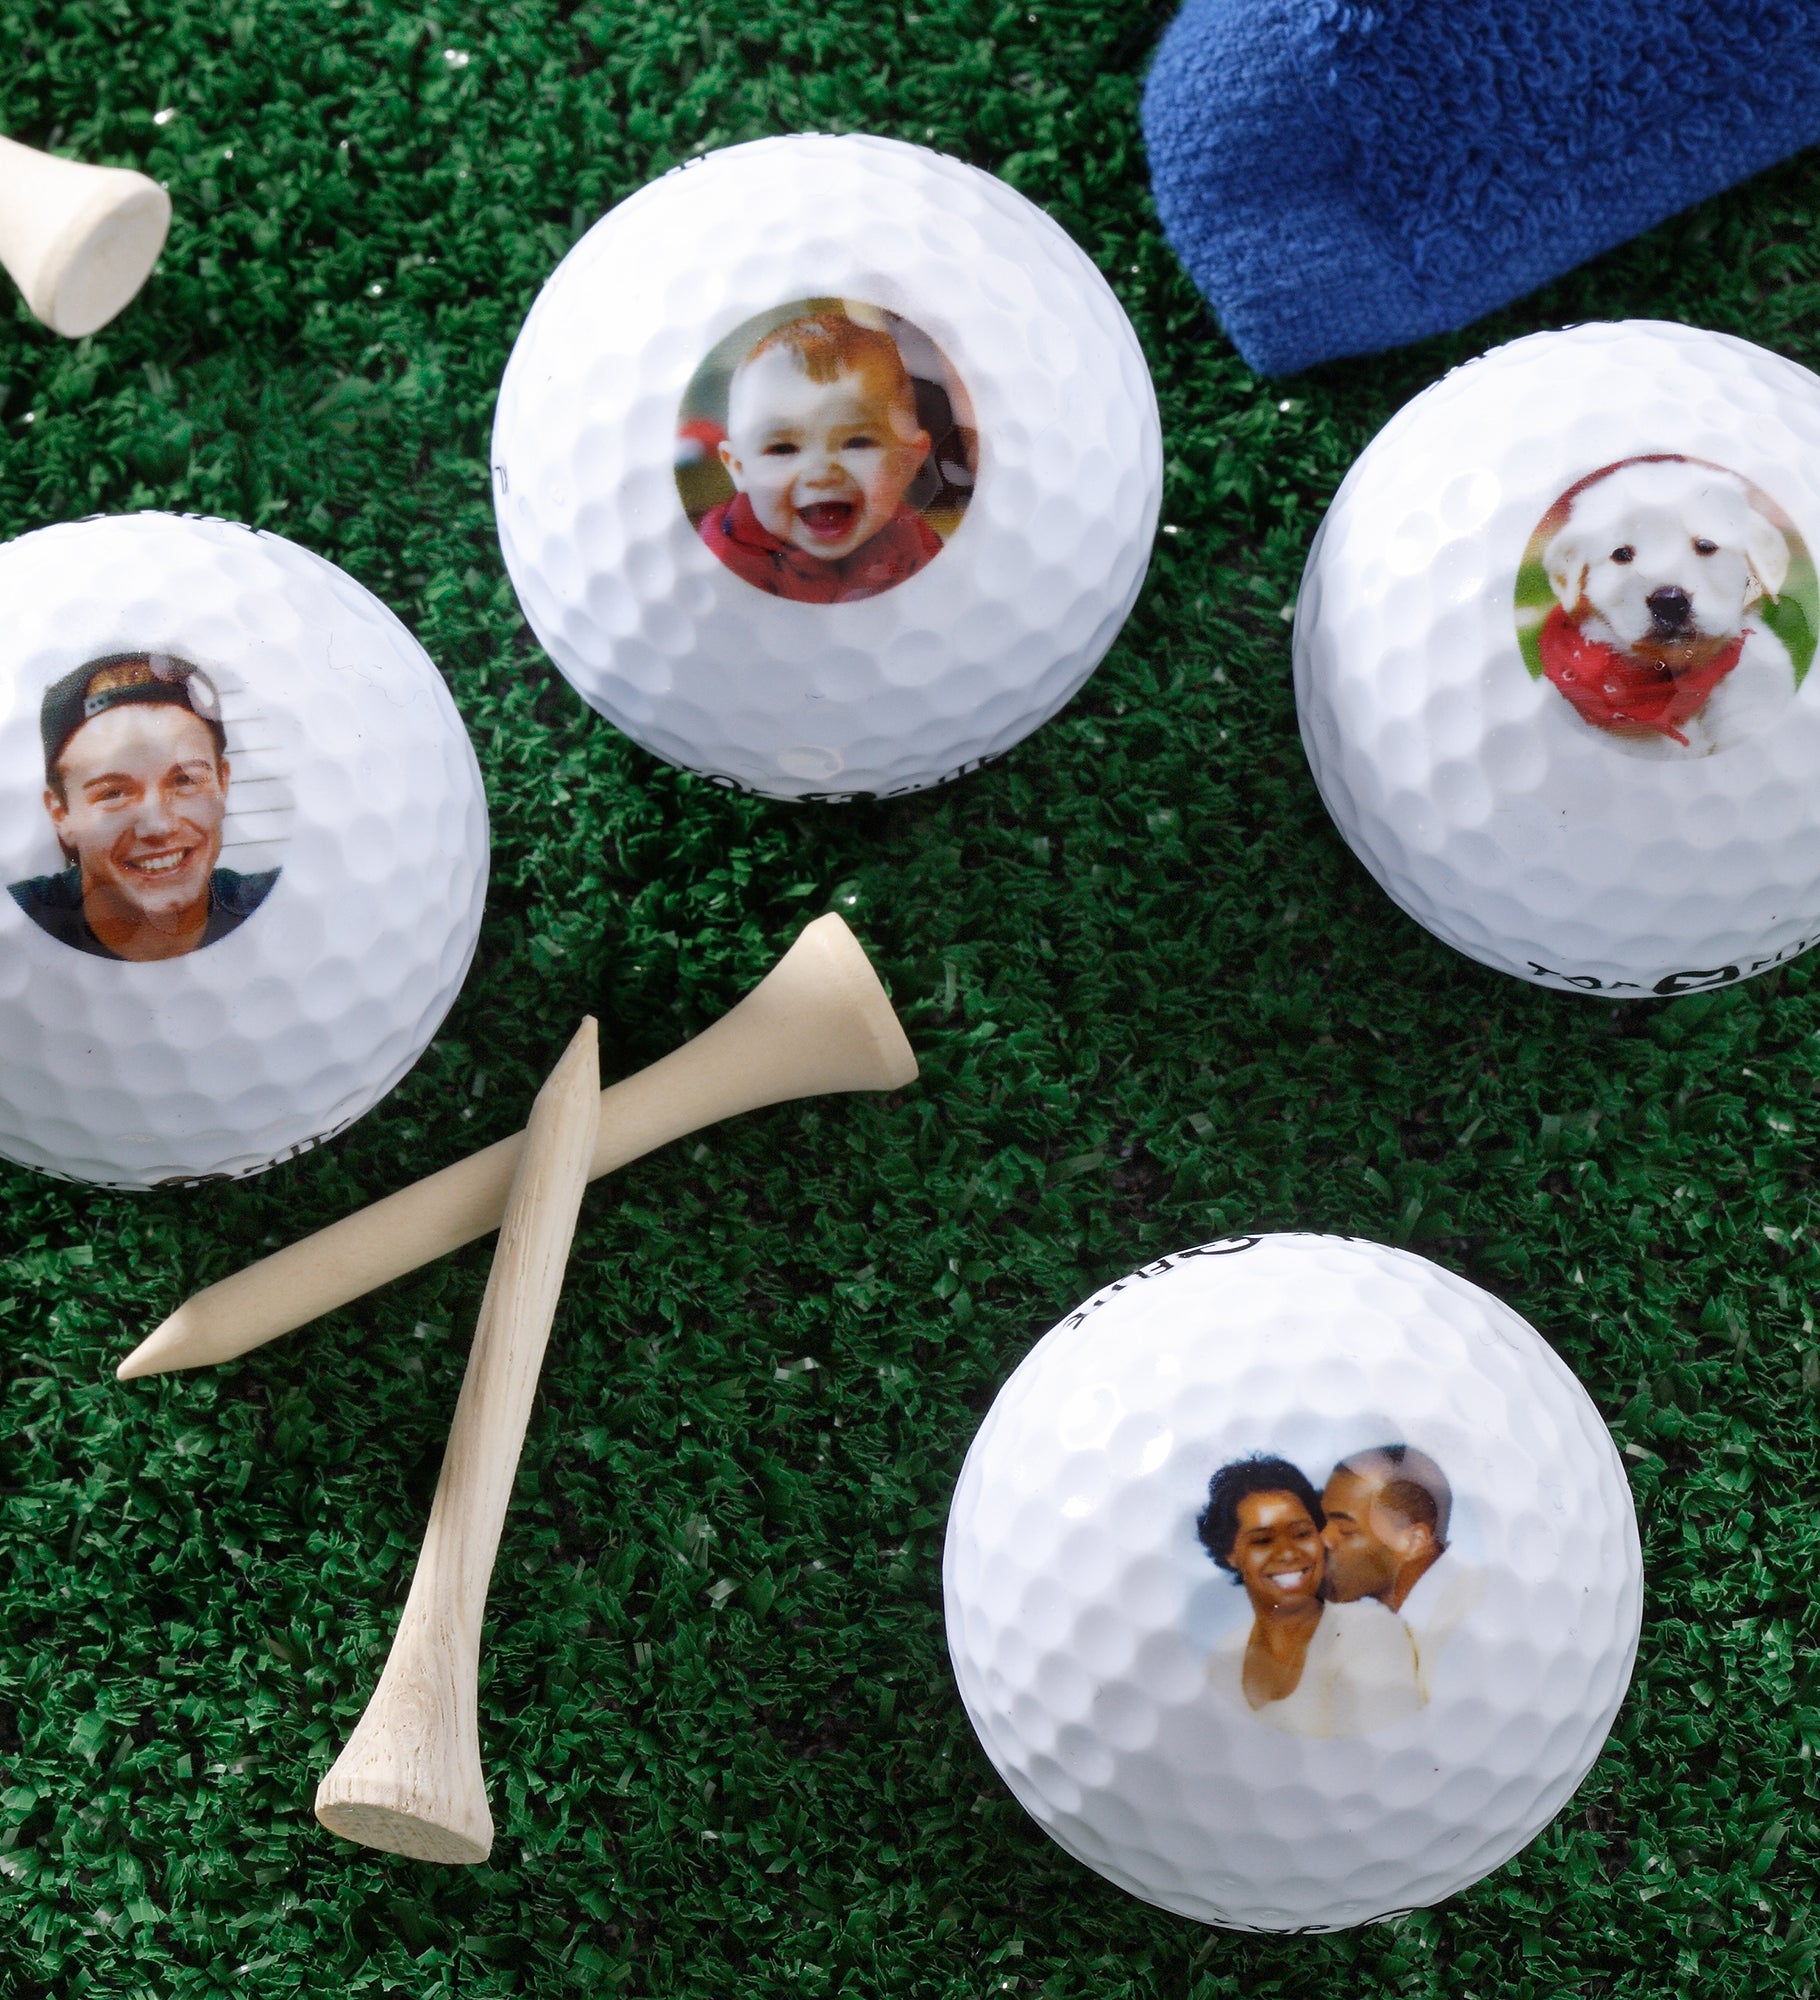 Photo Perfect Personalized Golf Ball Set of 12